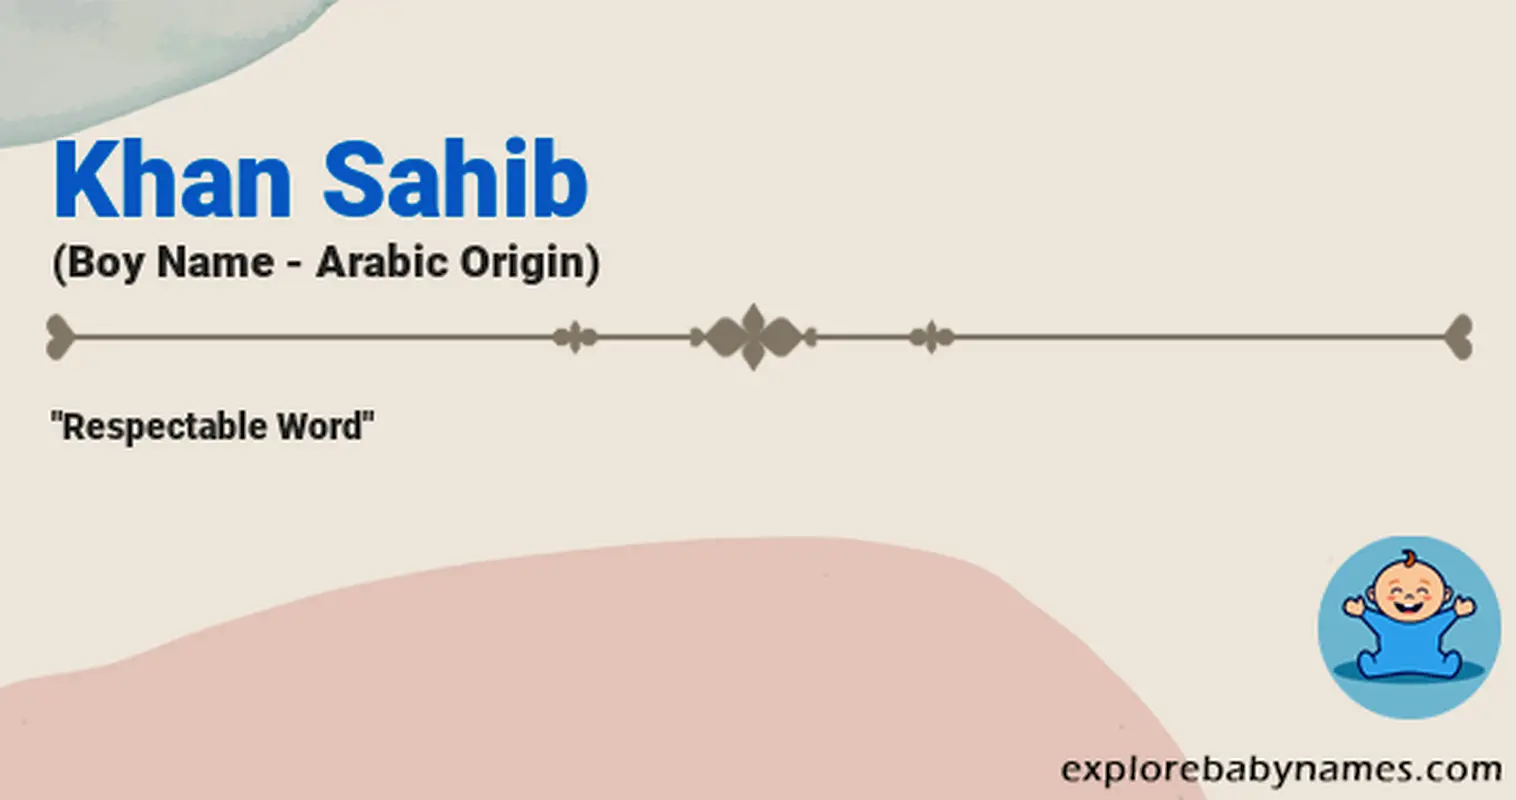 Meaning of Khan Sahib